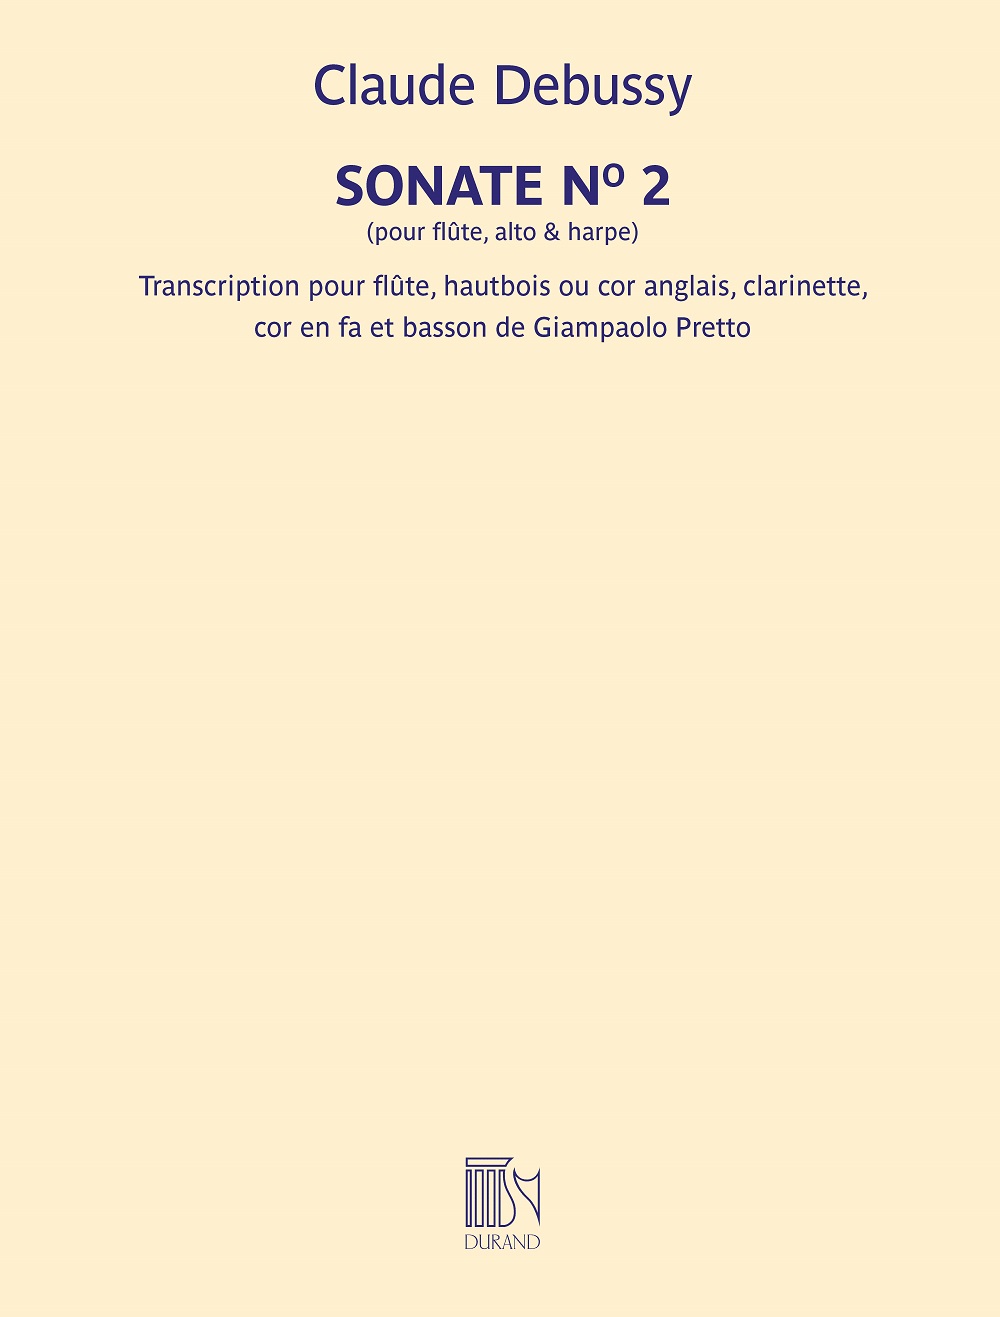 Claude Debussy: Sonate n. 2 pour flûte  alto & harpe: Wind